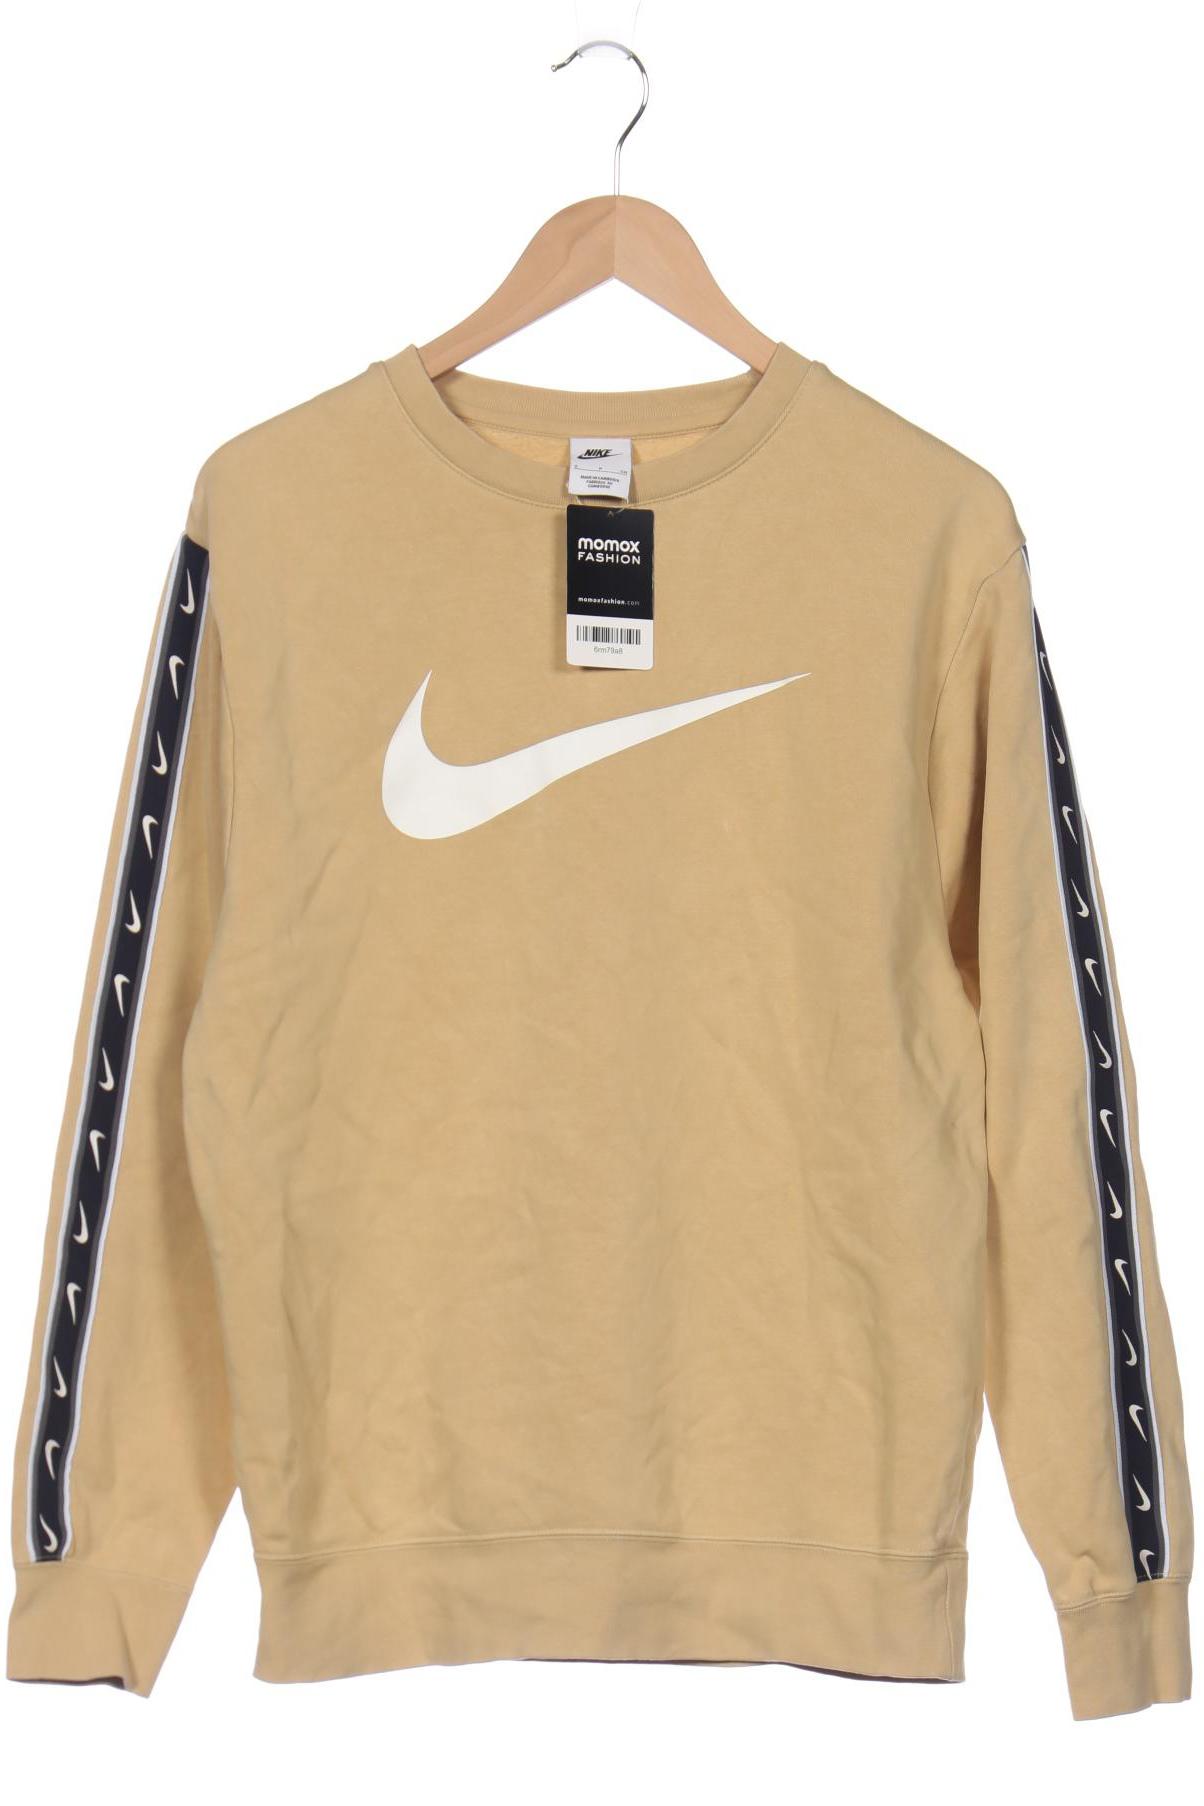 Nike Herren Sweatshirt, beige von Nike